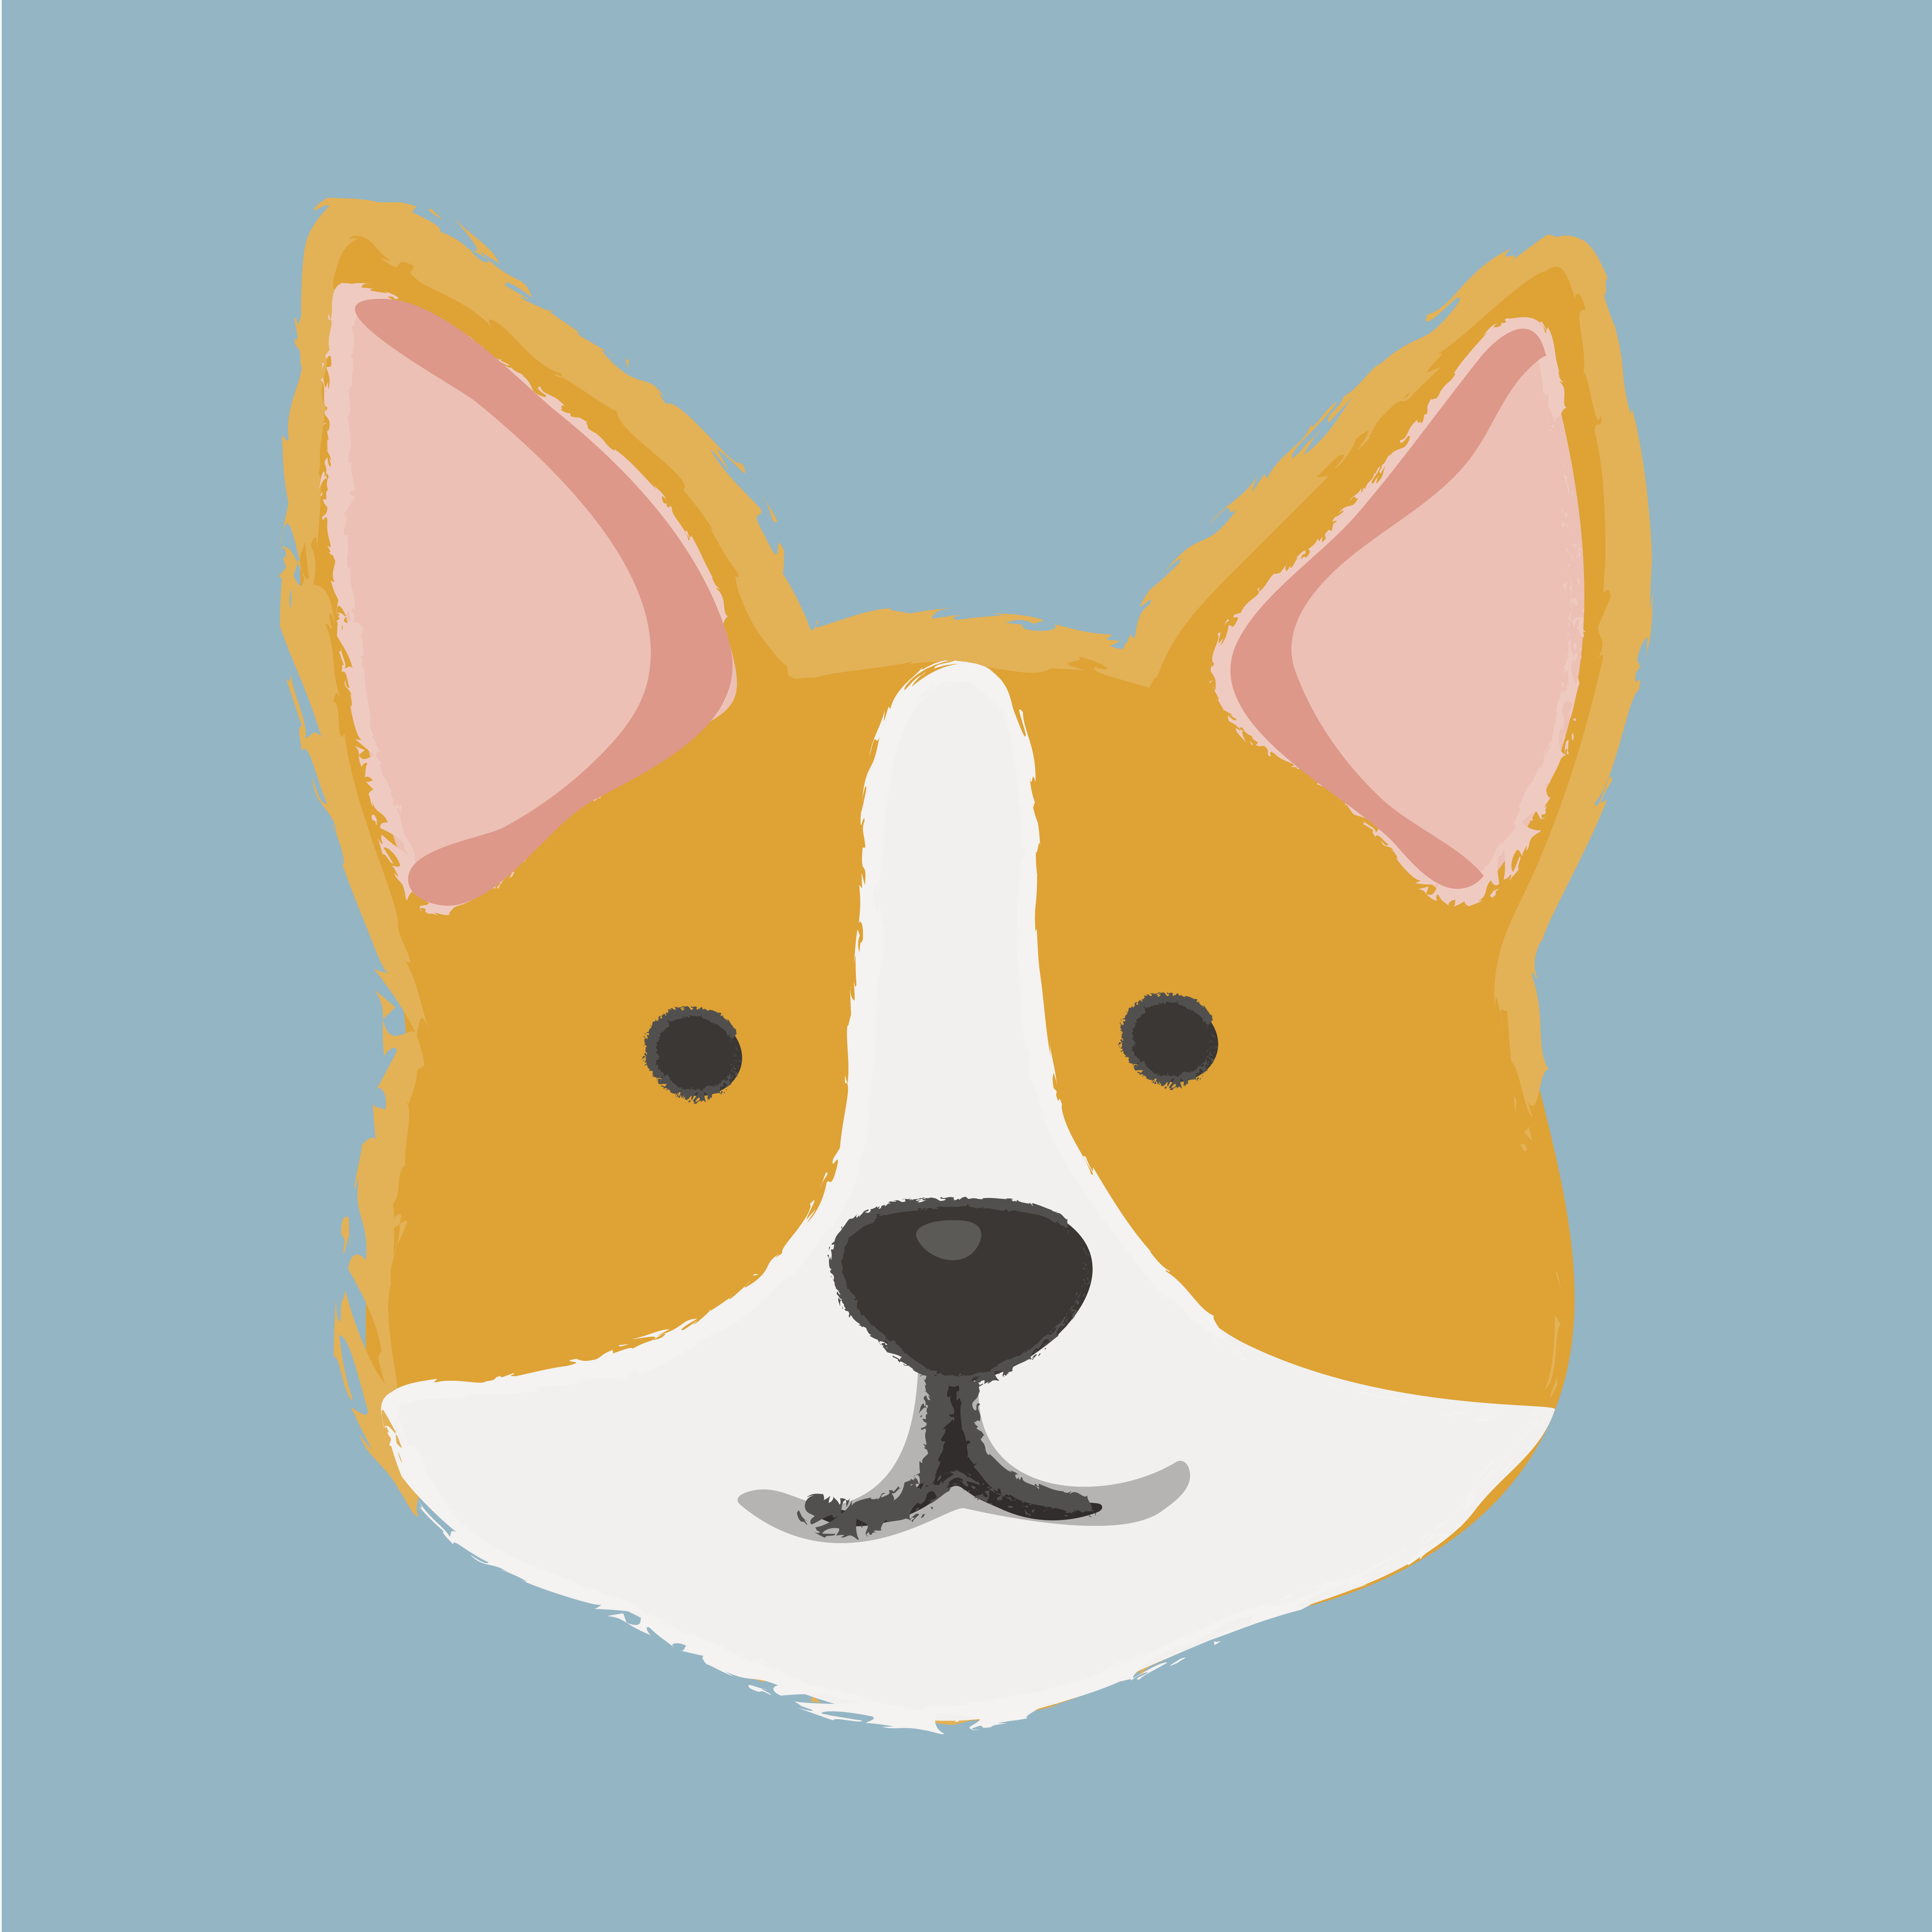 Cute illustration of a dog Download Free Vectors